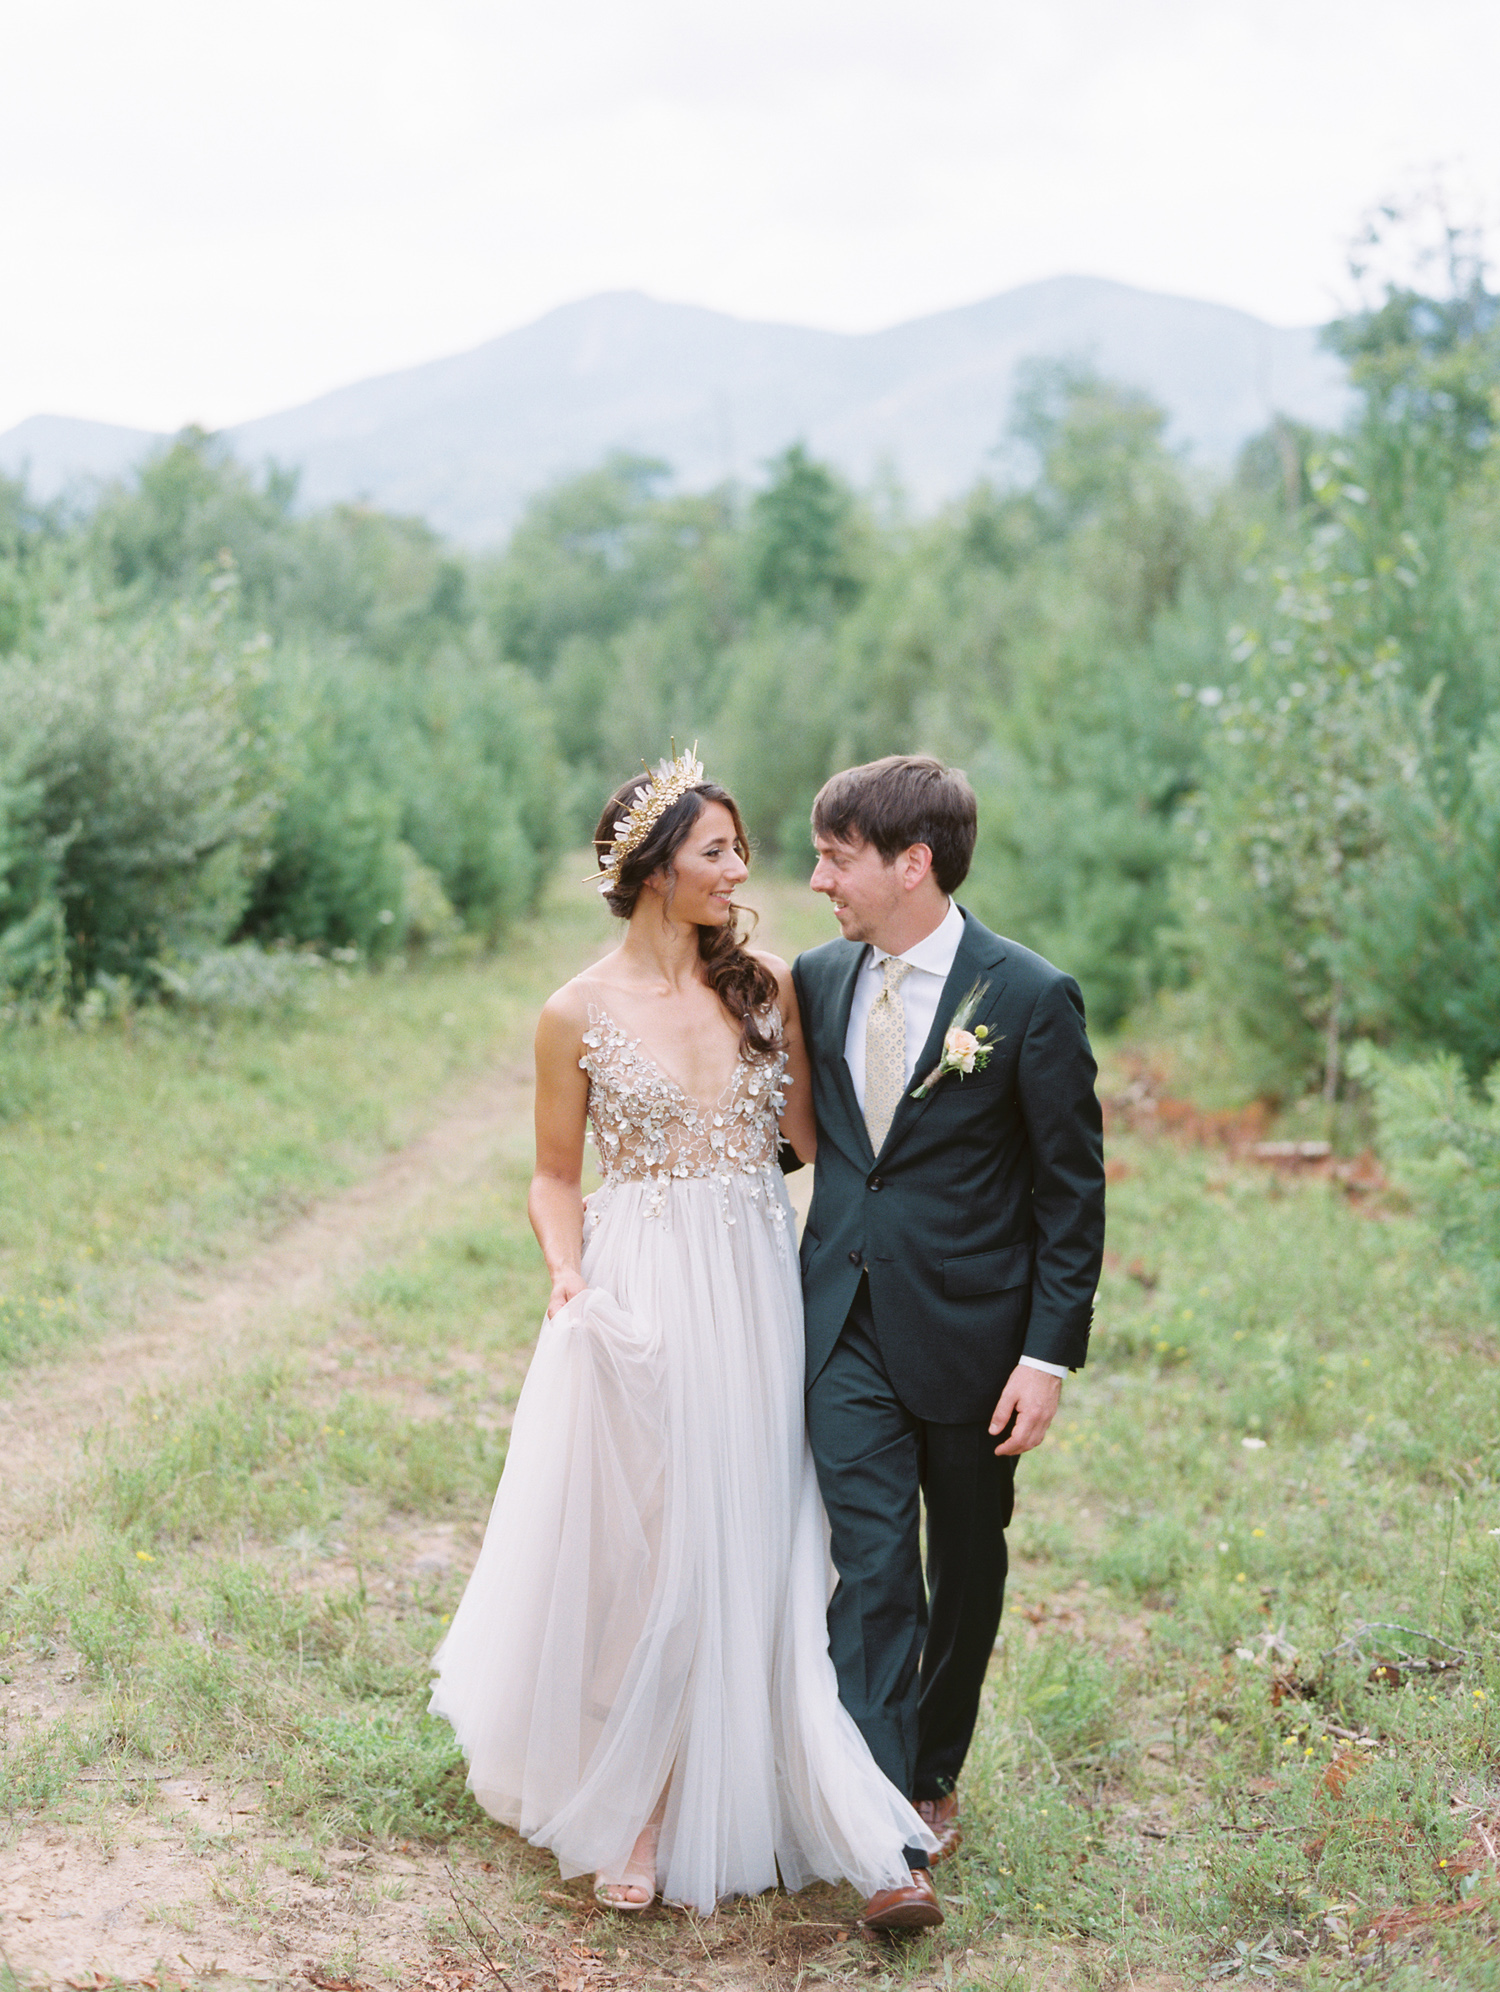 Adirondack Mountain Wedding | Luxury Bridal fashion and laid back elegance make this mountain wedding one to remember. Photographed by Mary Dougherty